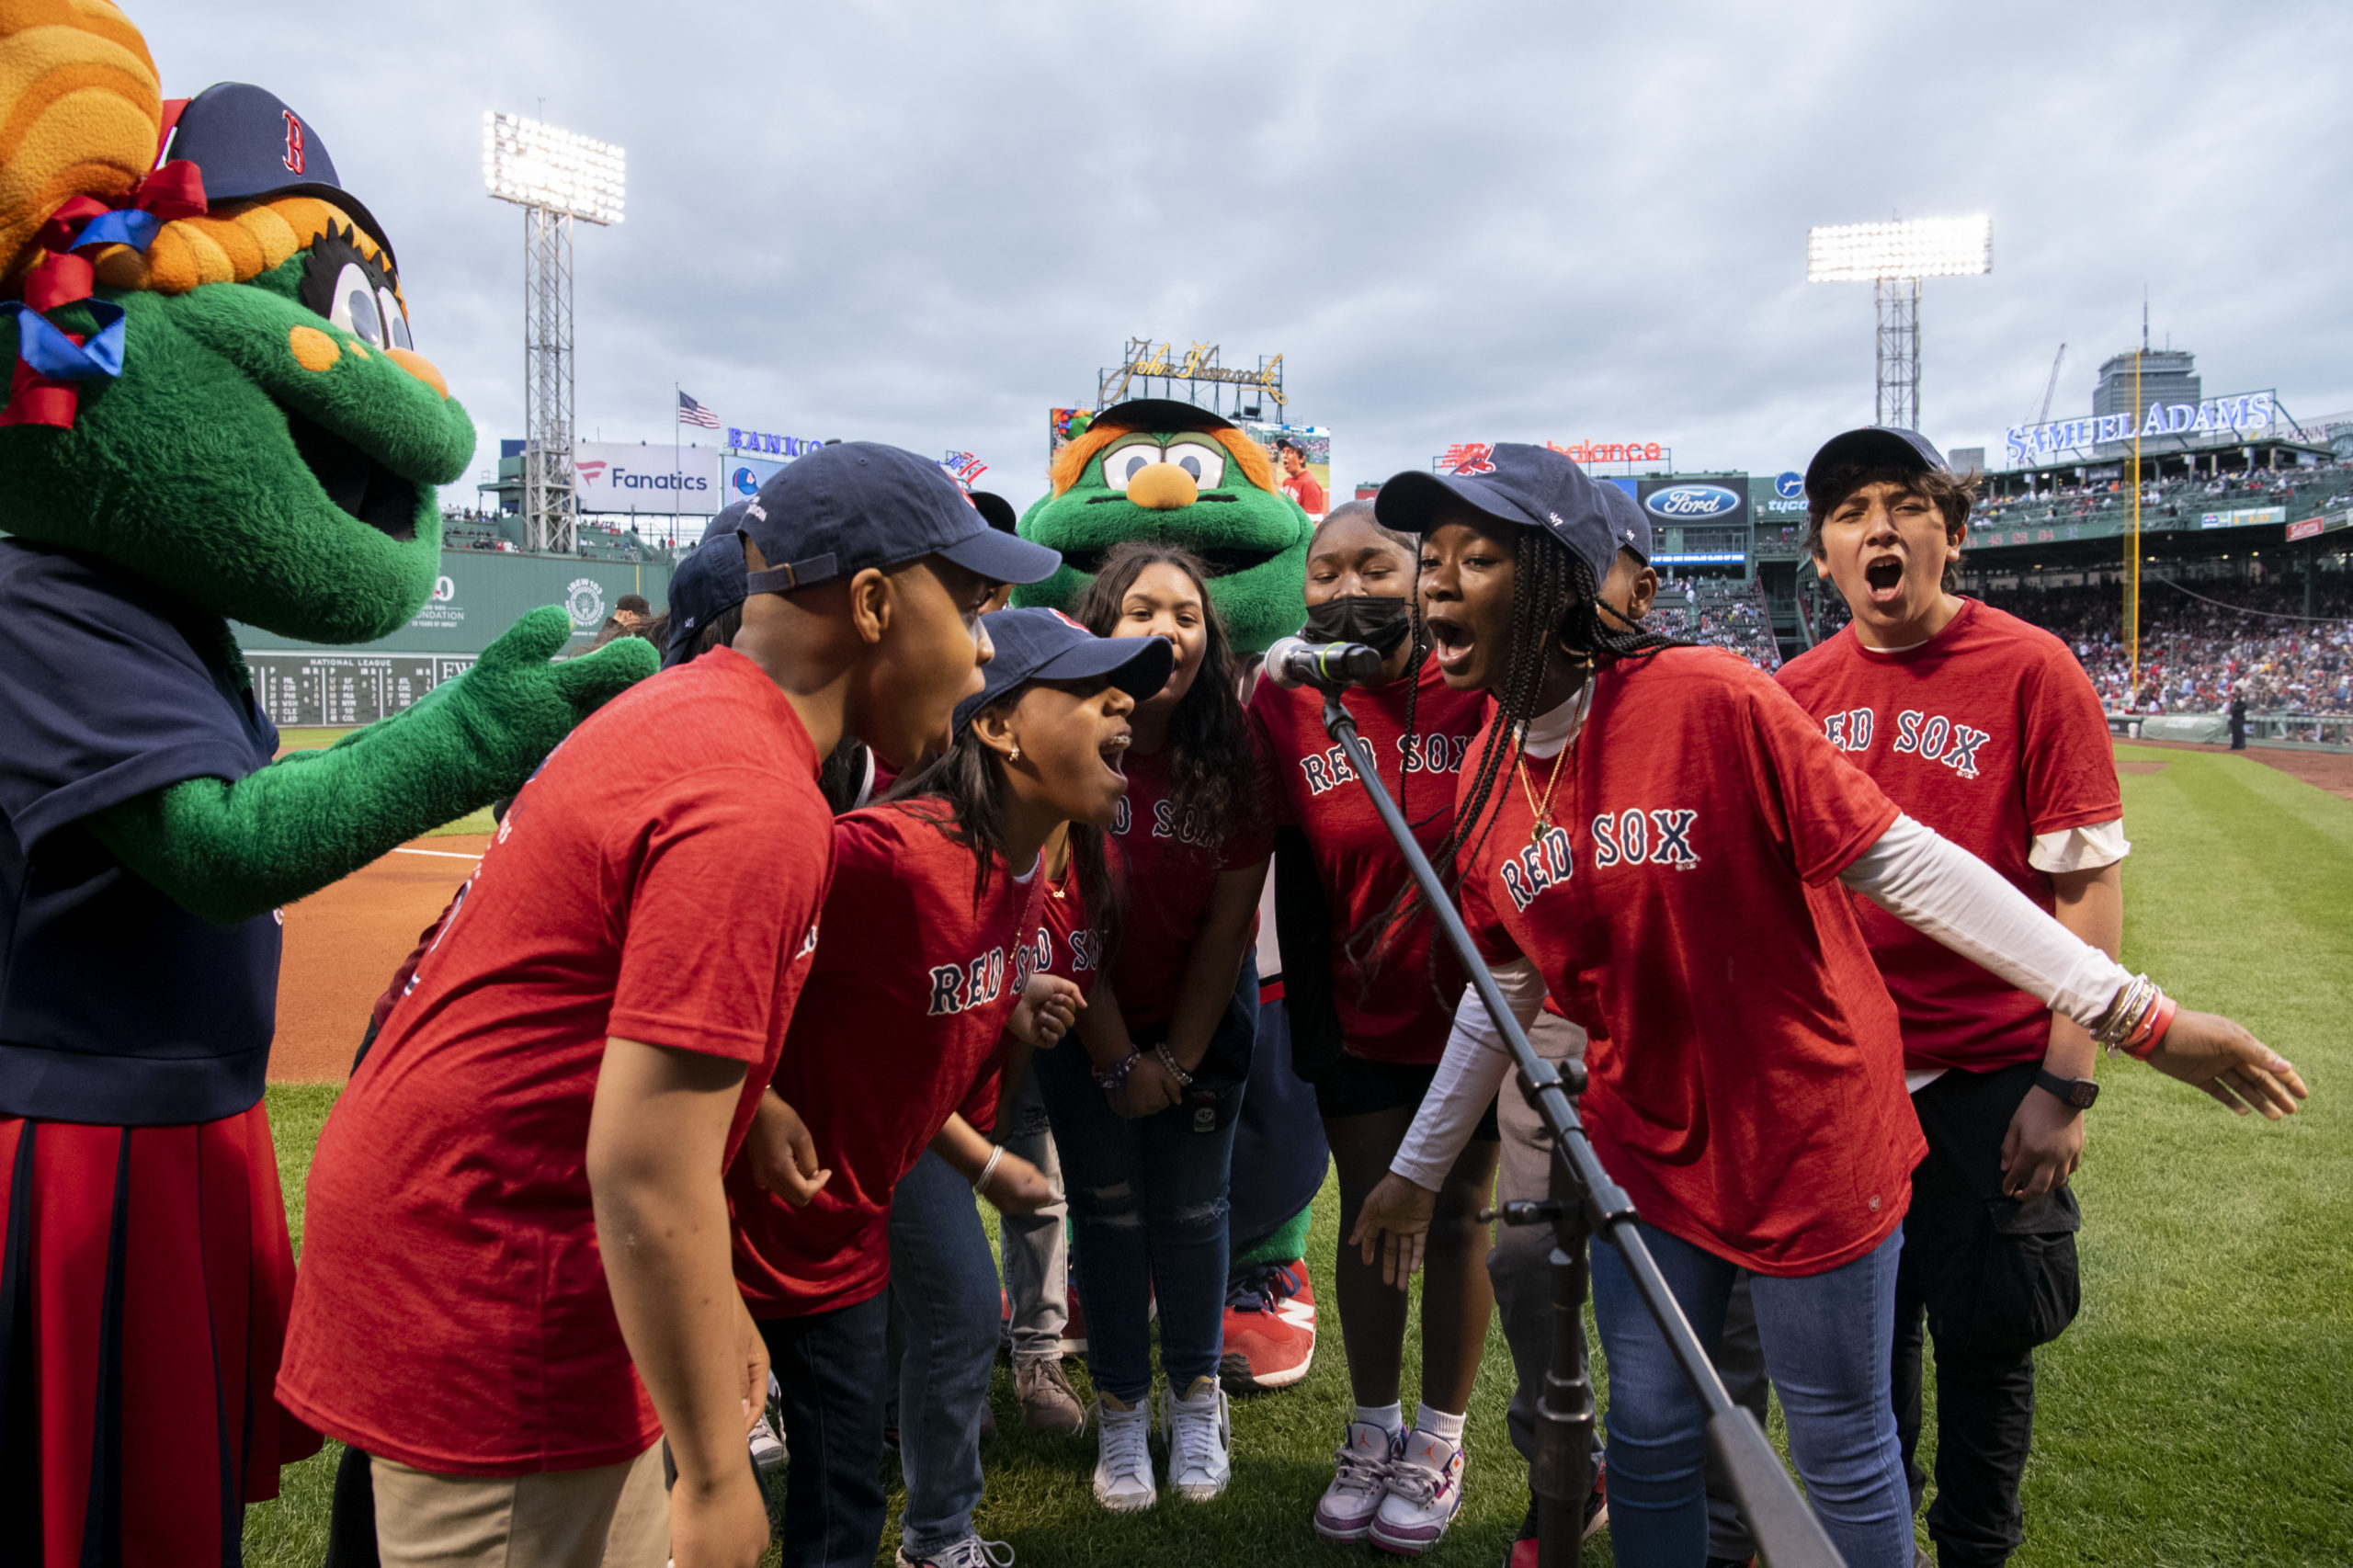 Red Sox Foundation (@redsoxfoundation) • Instagram photos and videos